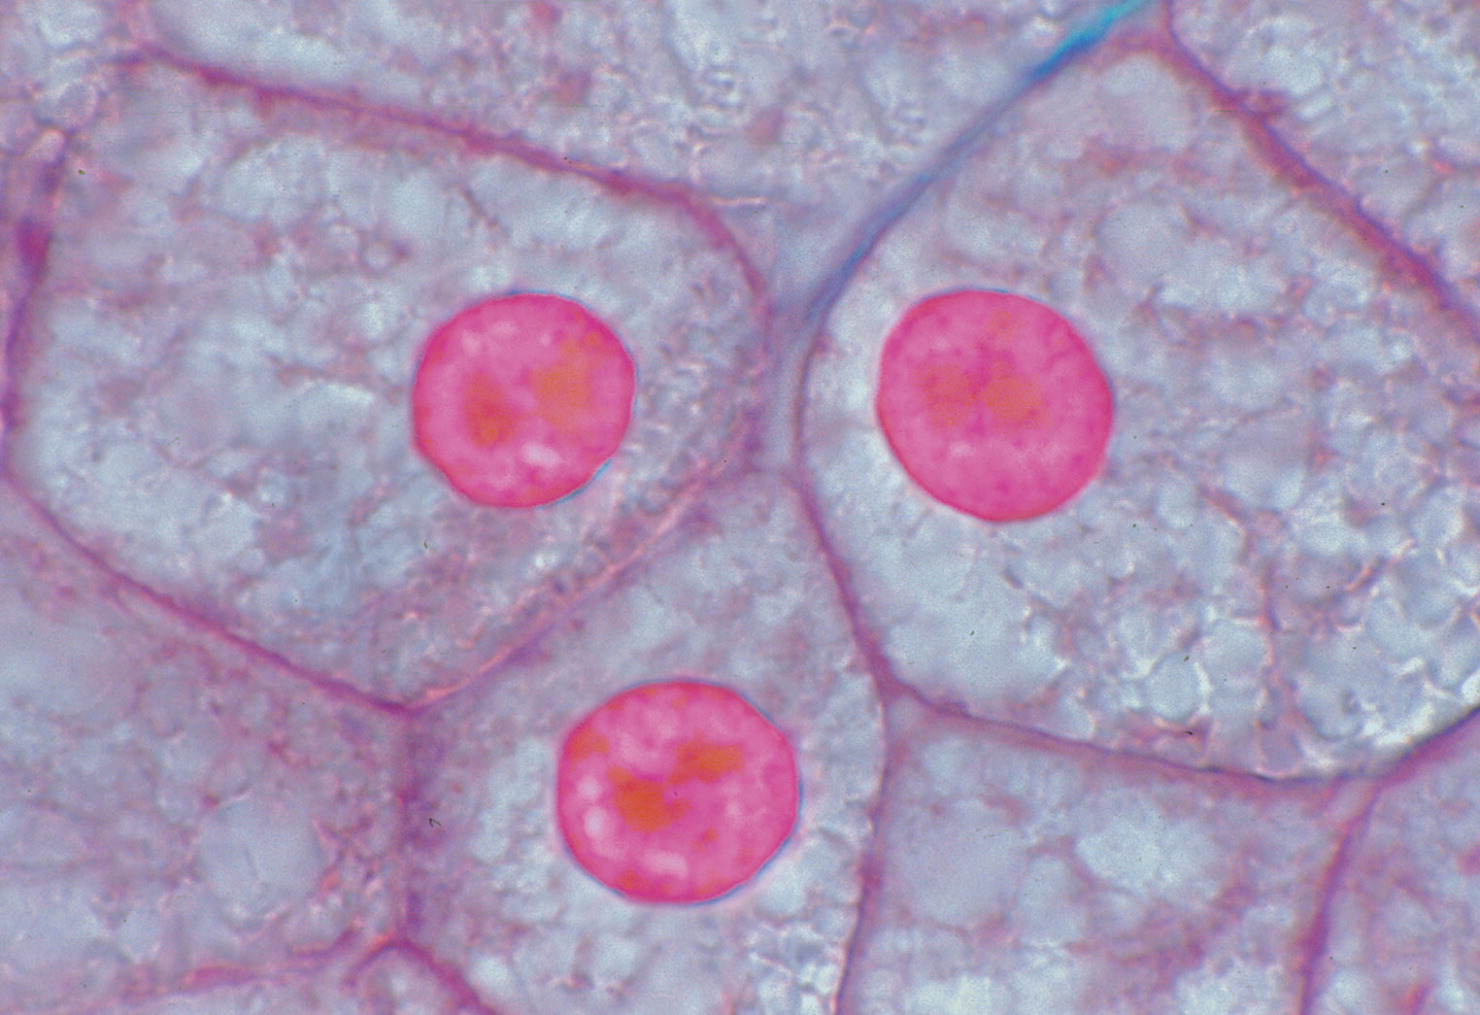 animal cells microscope